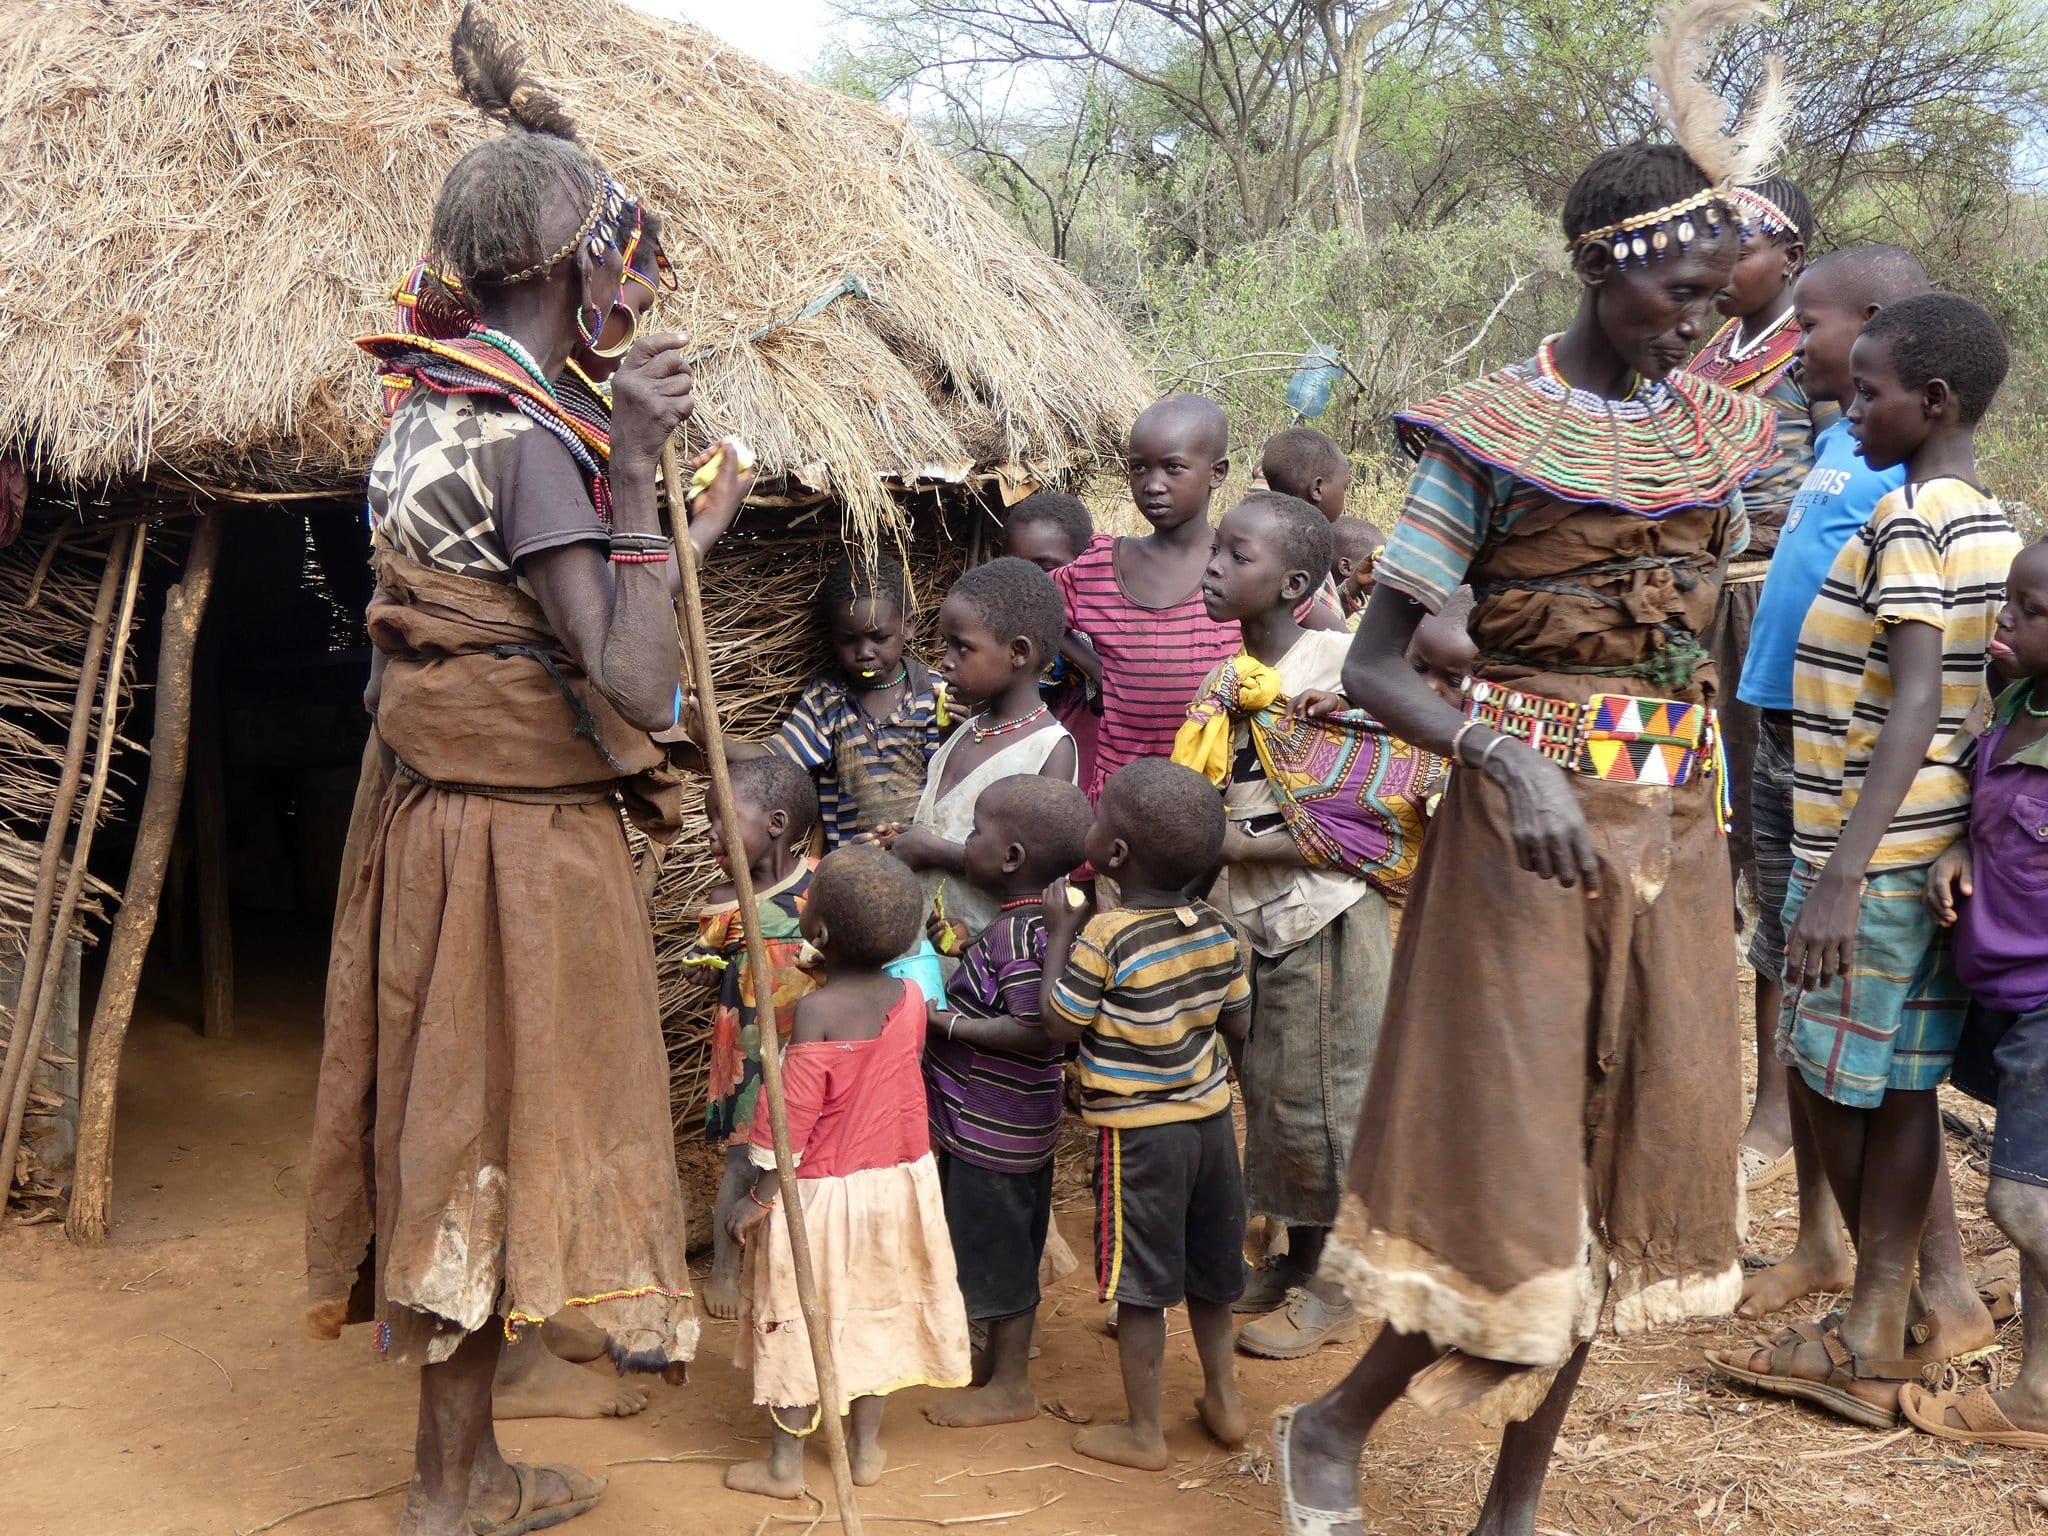 Kalenjin Tribe